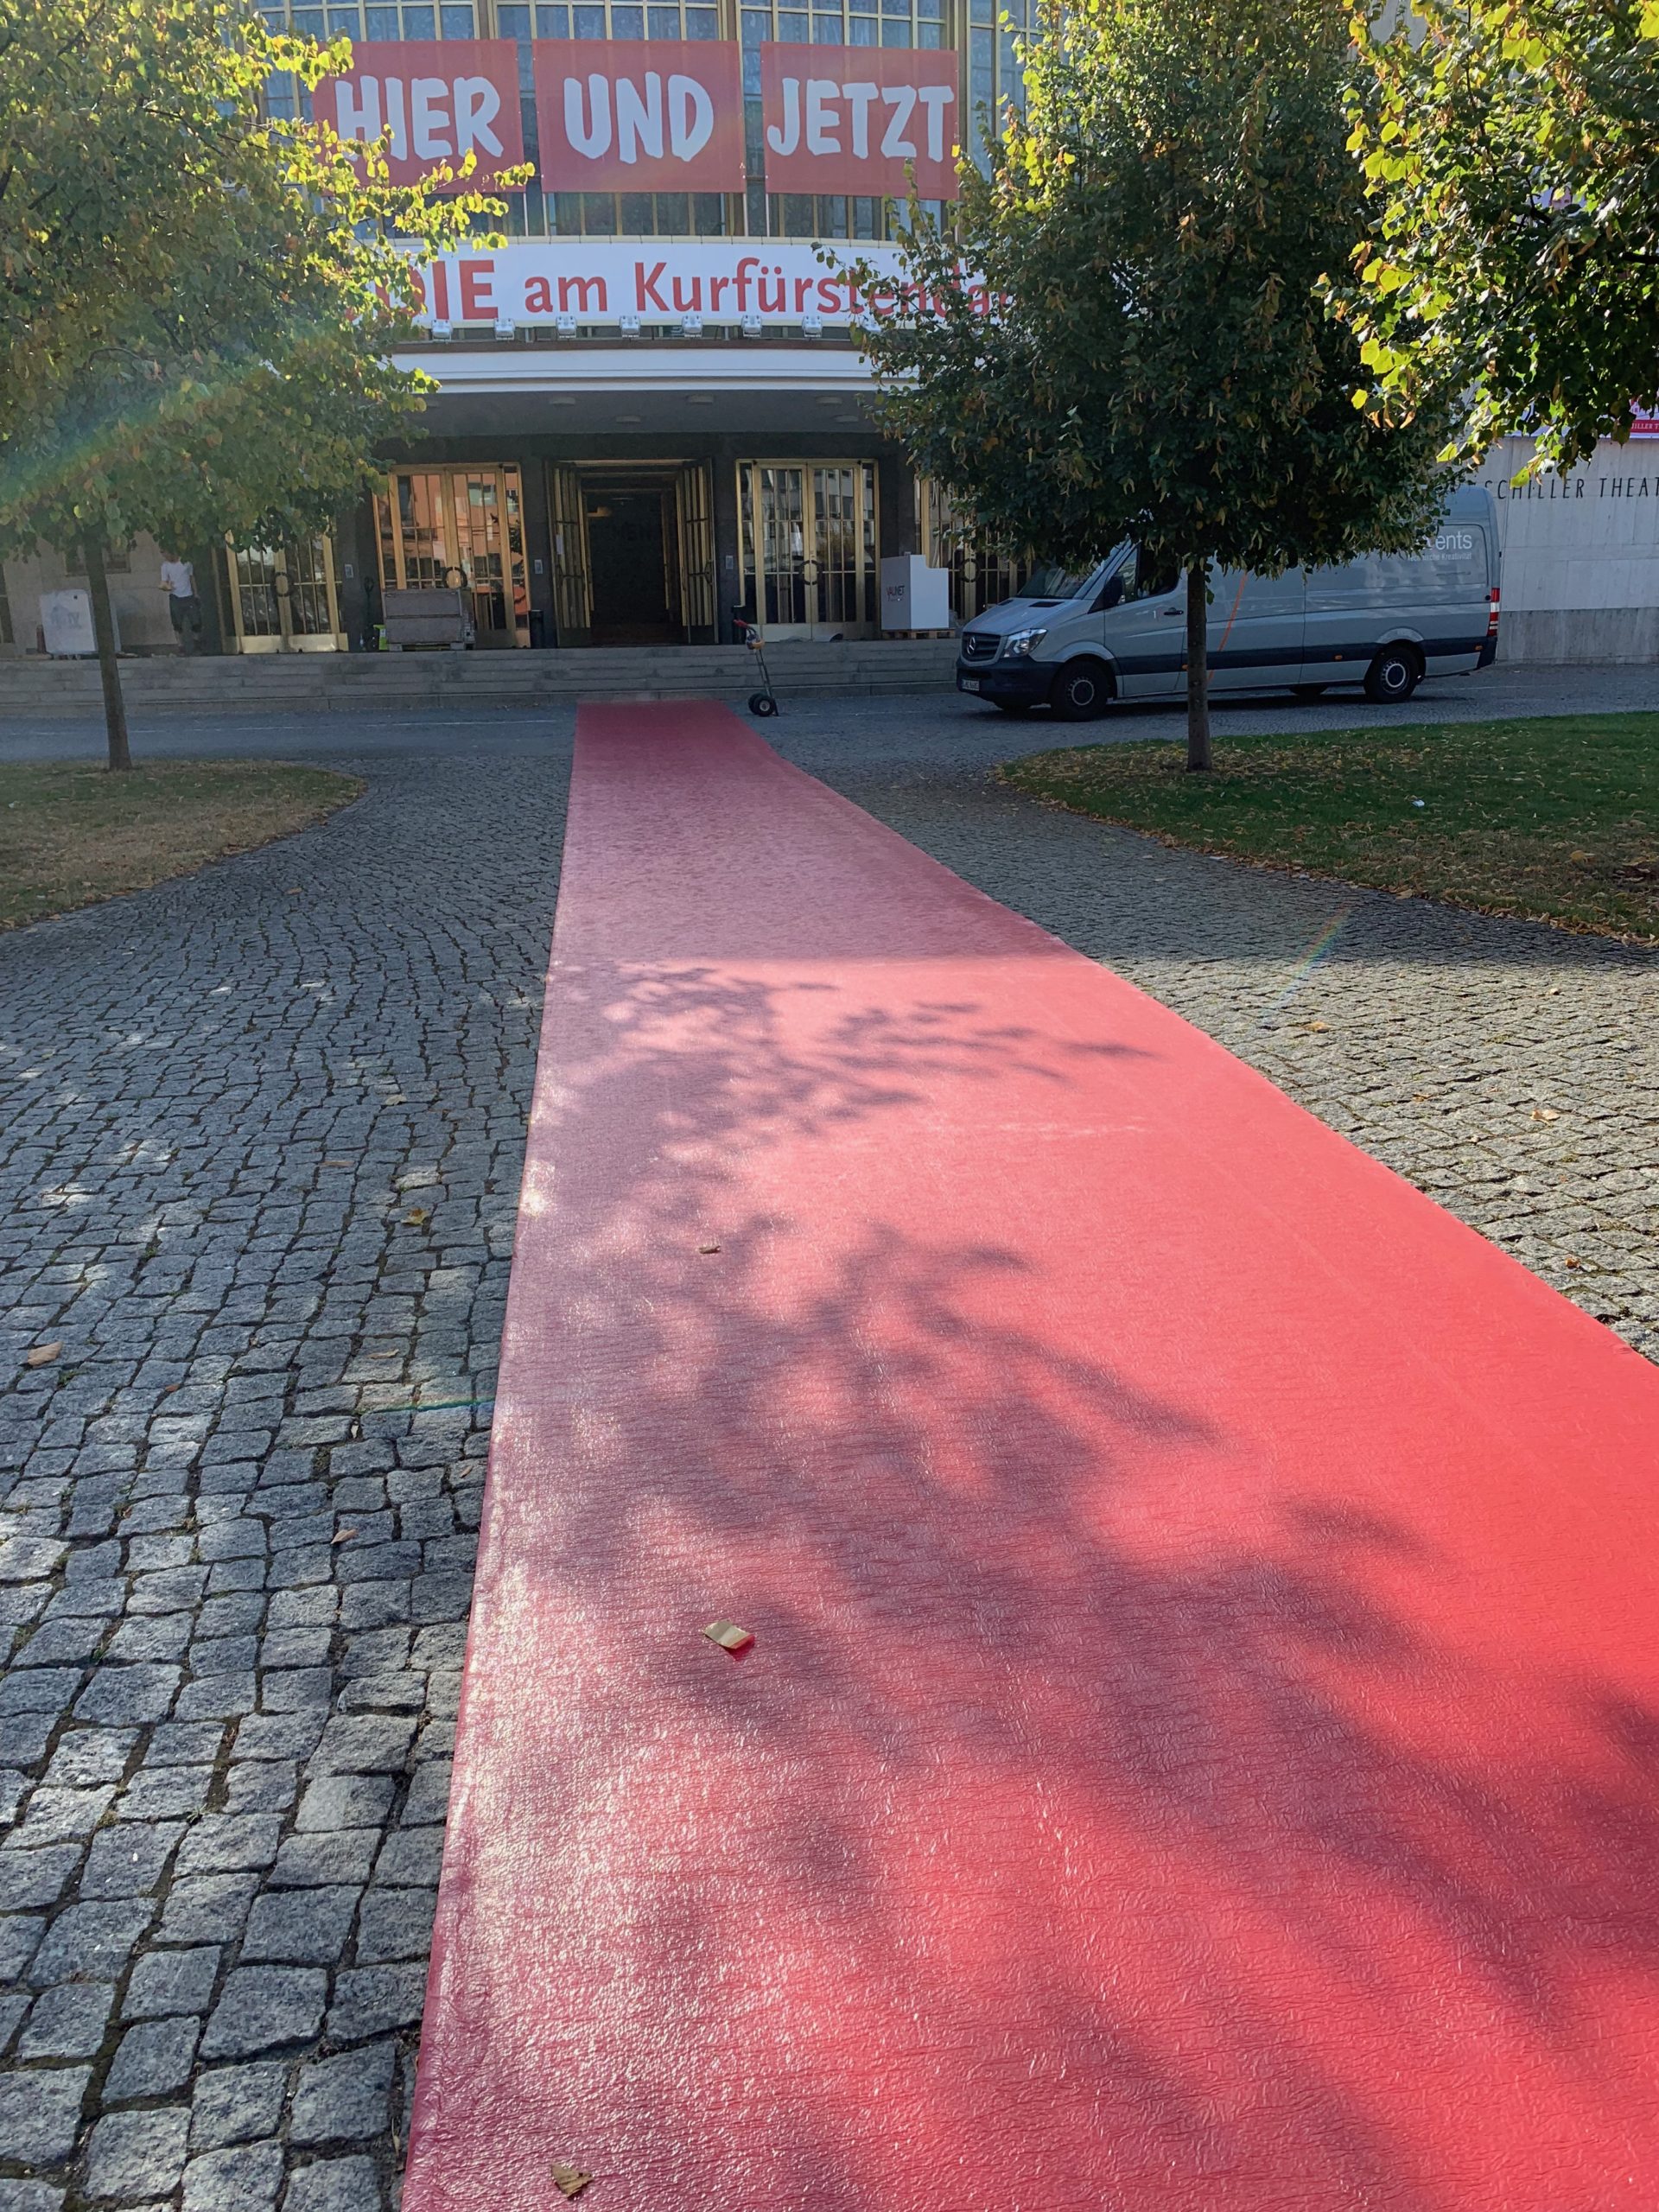 Foto vom Schillertheater 2019-Bodenbelag Nadelvlies-eco